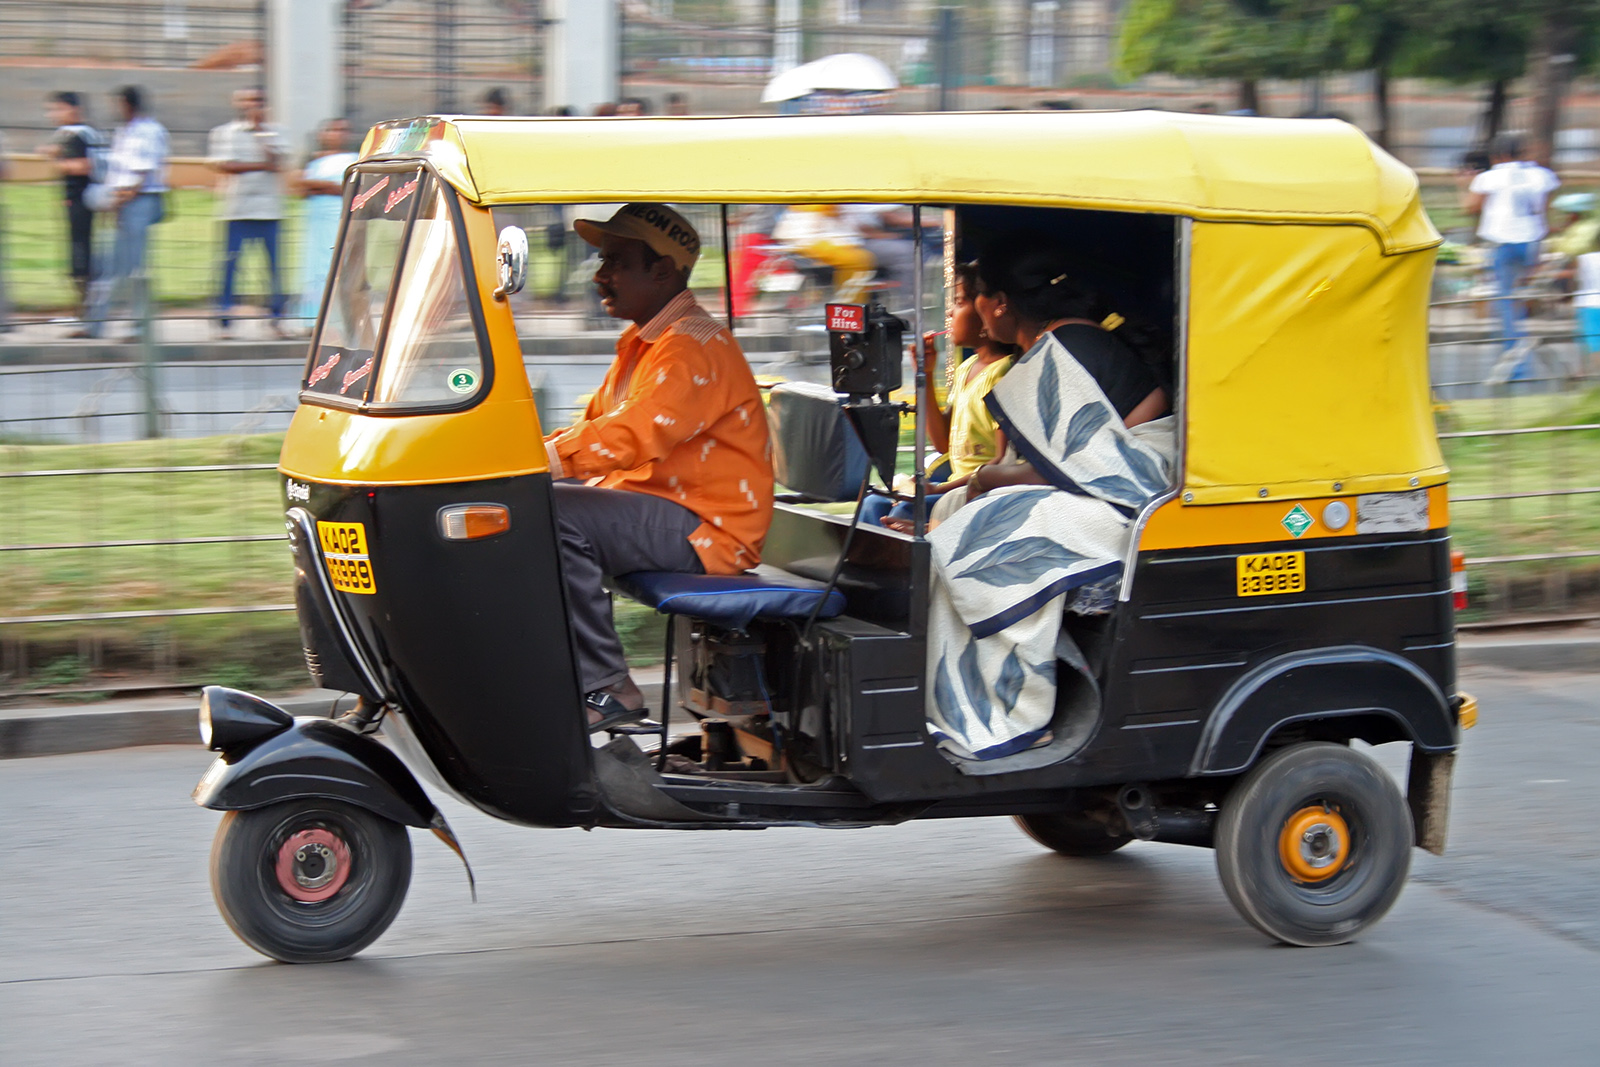 Auto rickshaw - Wikipedia